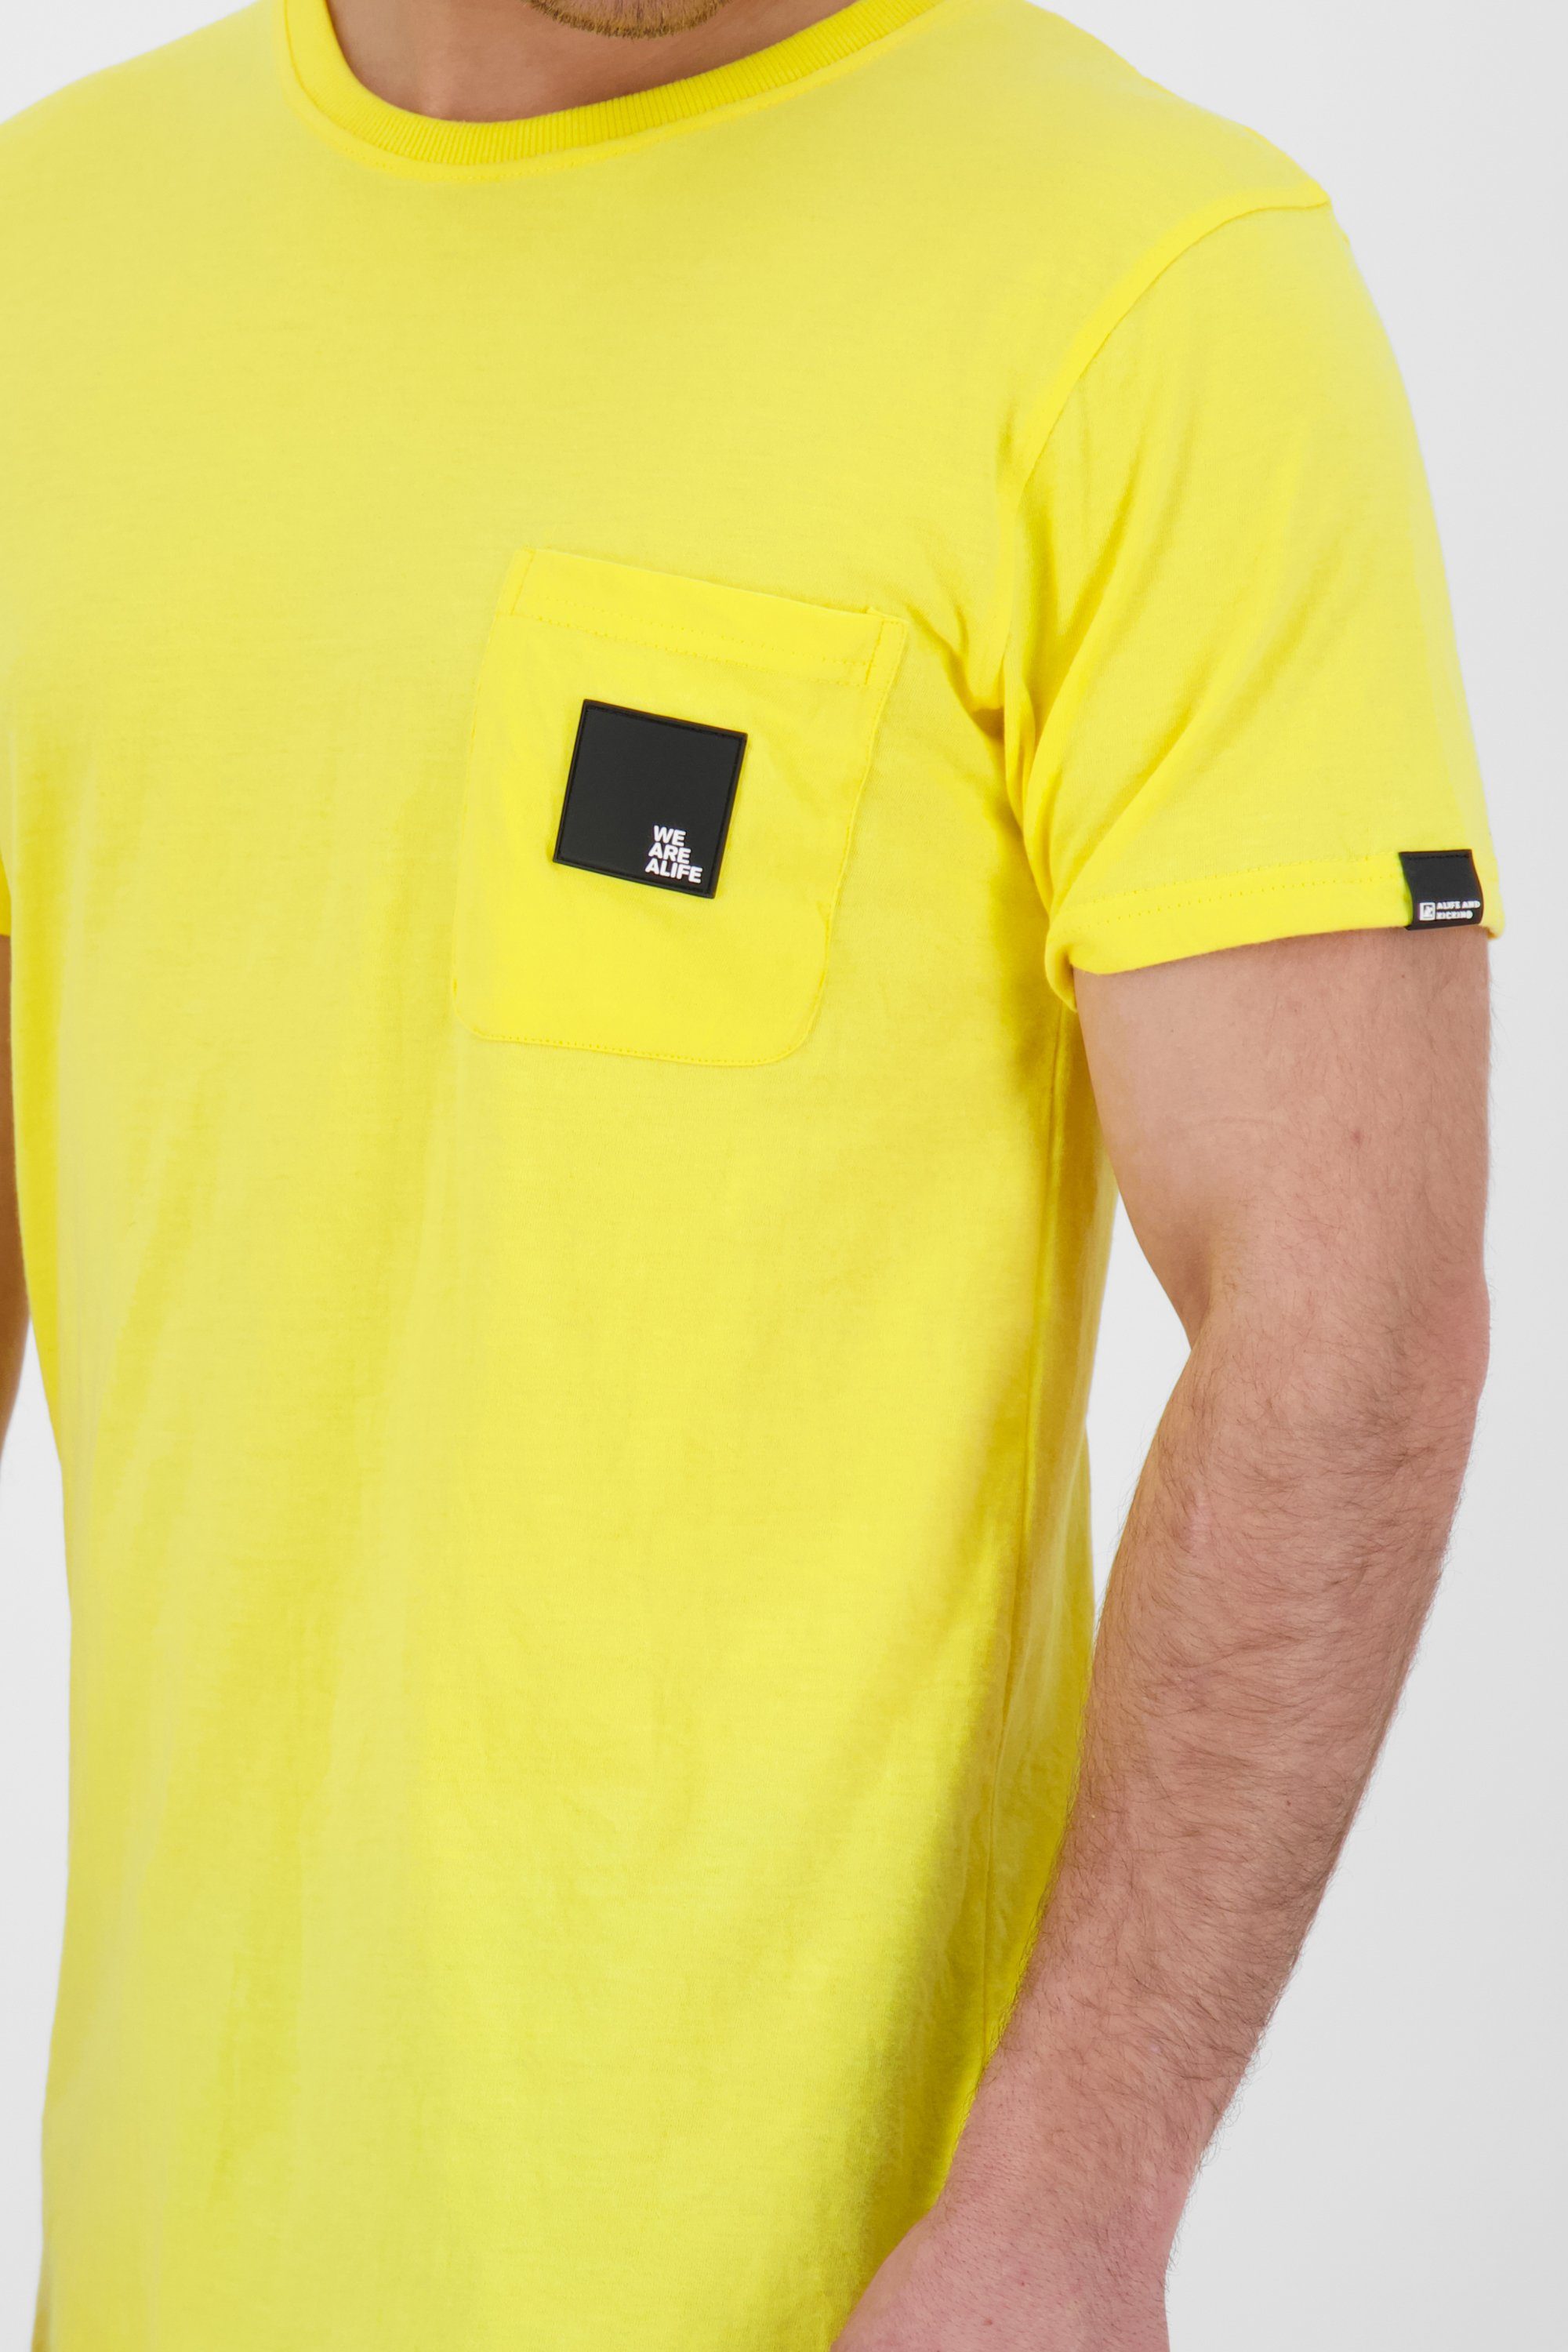 Alife & PocketAK T-Shirt Logo lime T-Shirt Herren Kickin